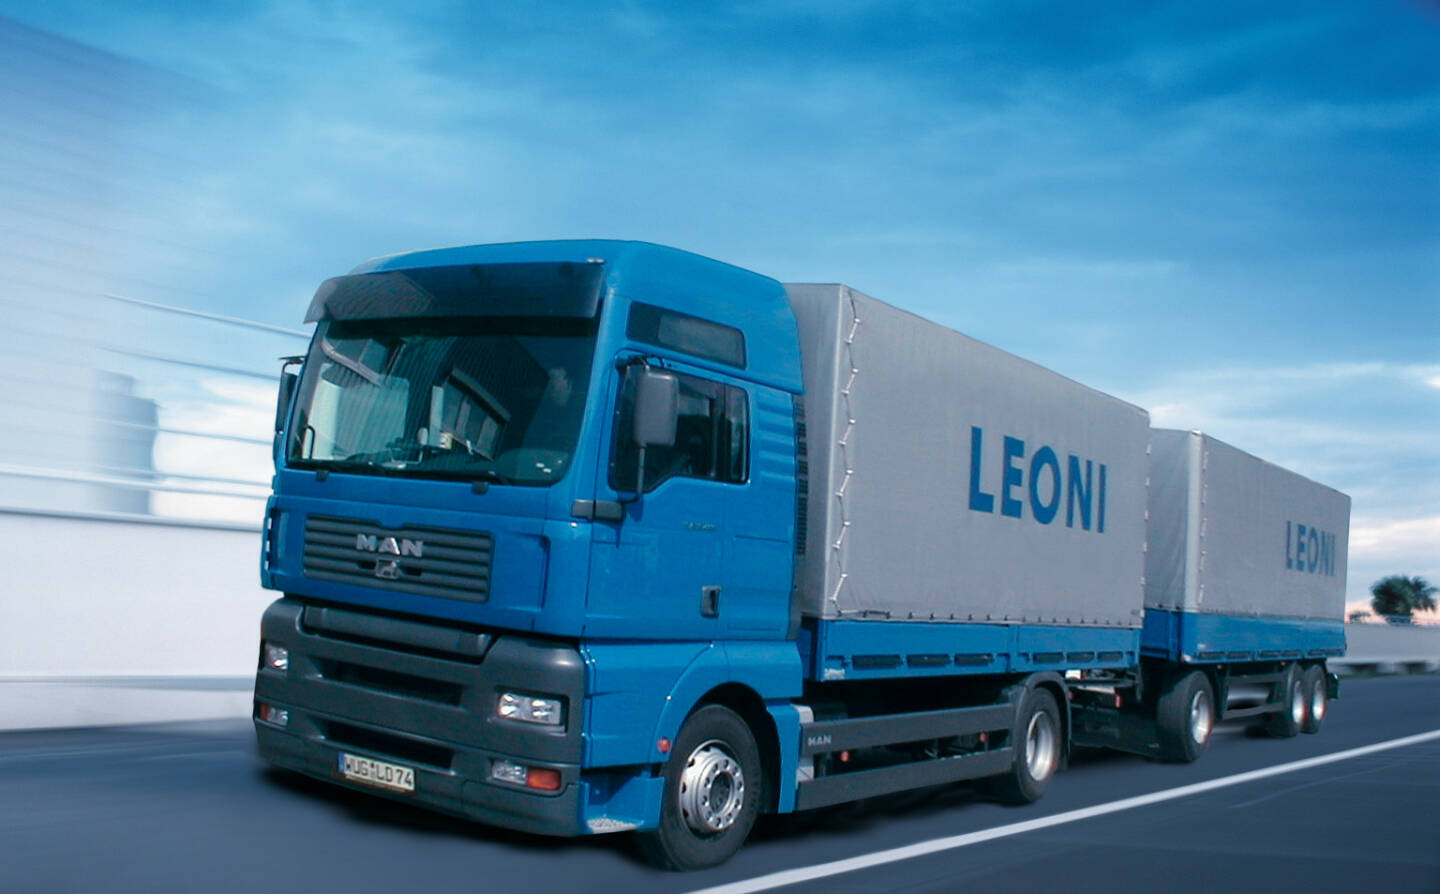 Leoni-LKW - Werksverkehr